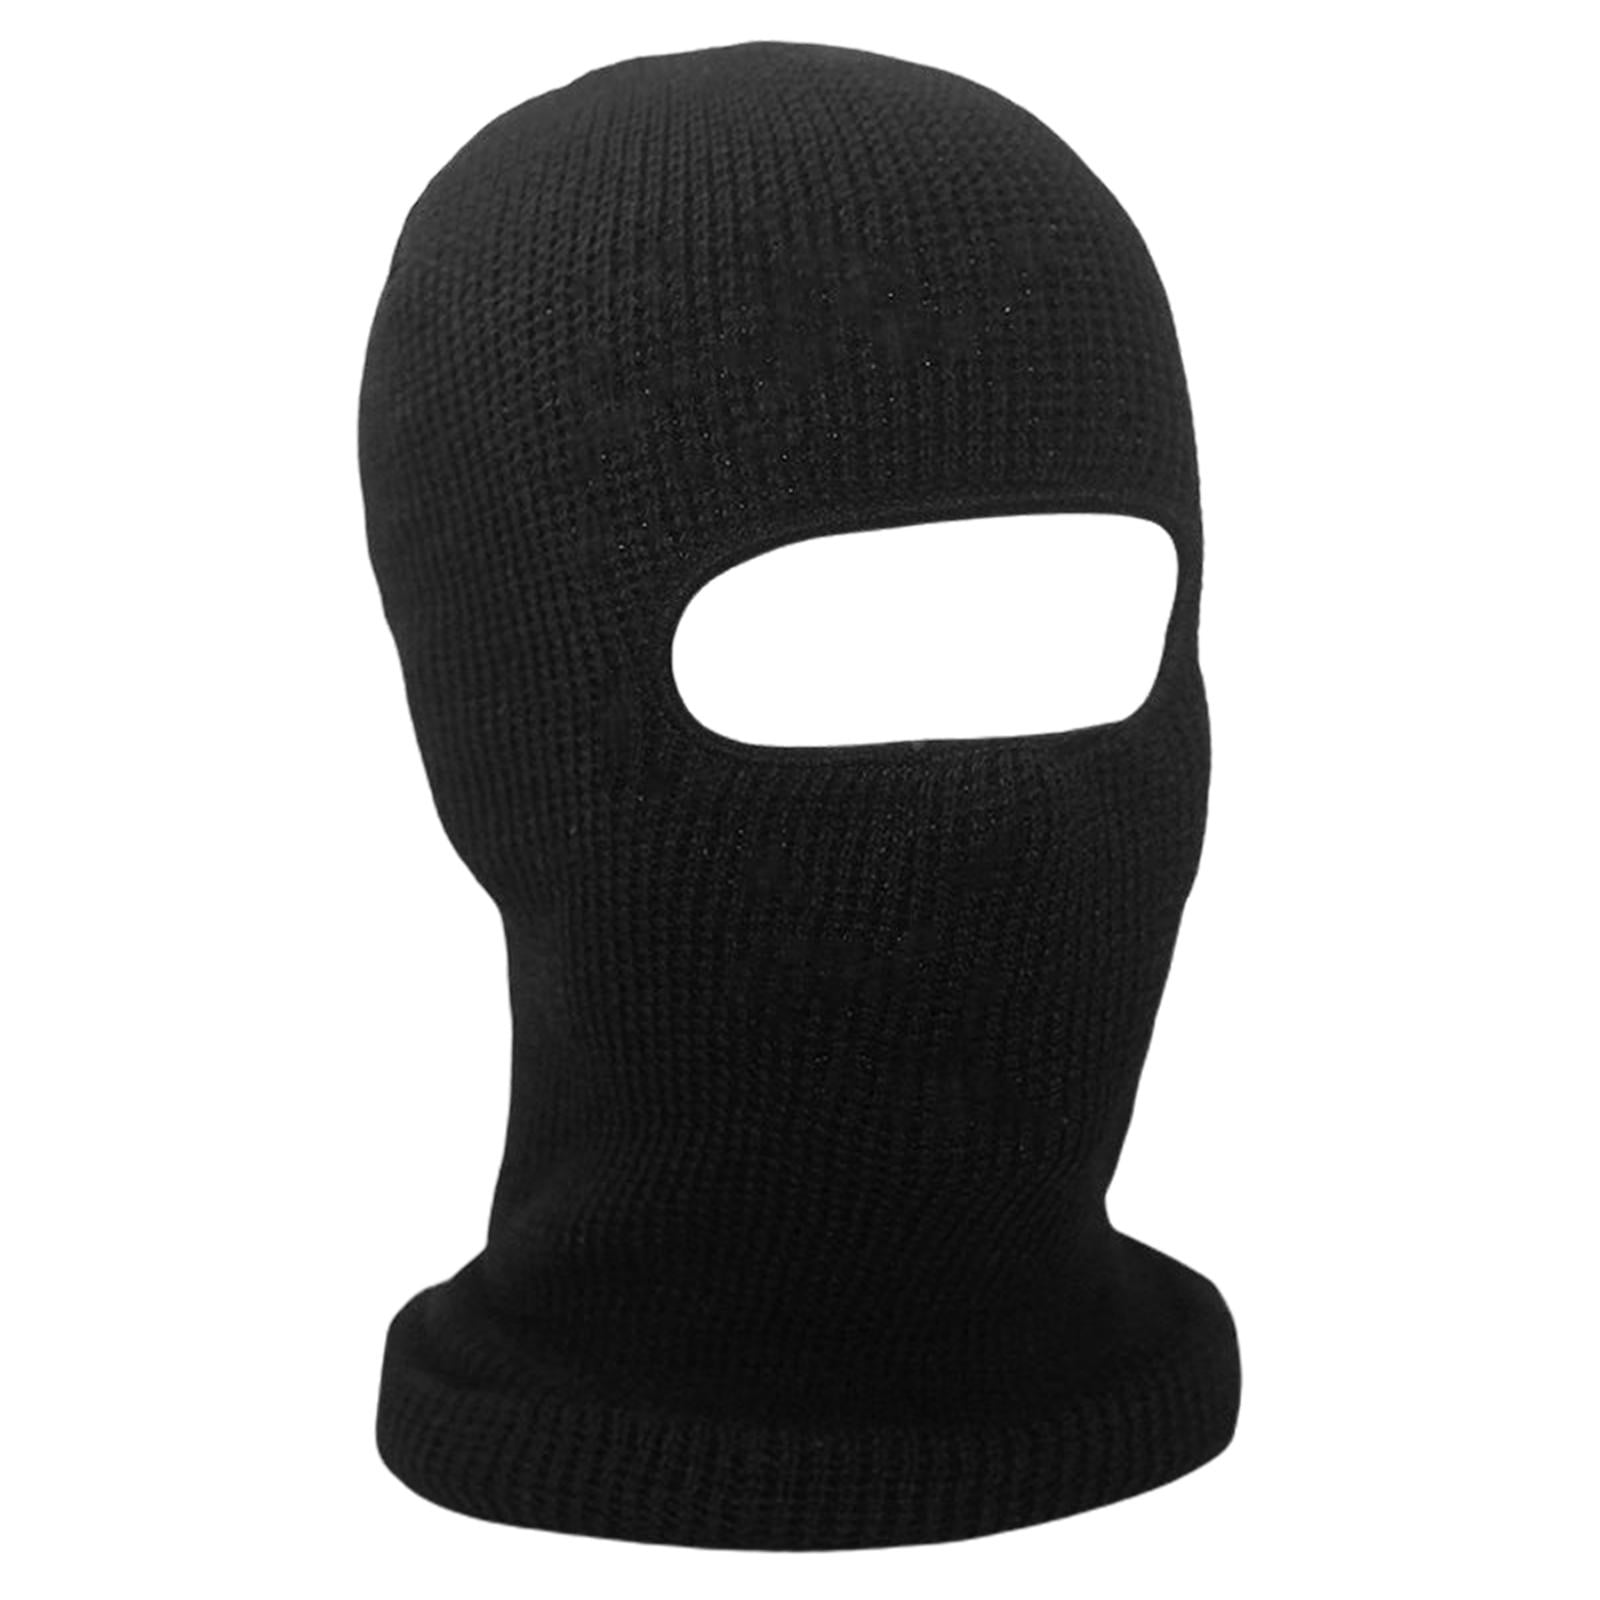 Balaclava Black Full Face Mask 1 Hole Thin Ninja Helmet Liner for sale online 